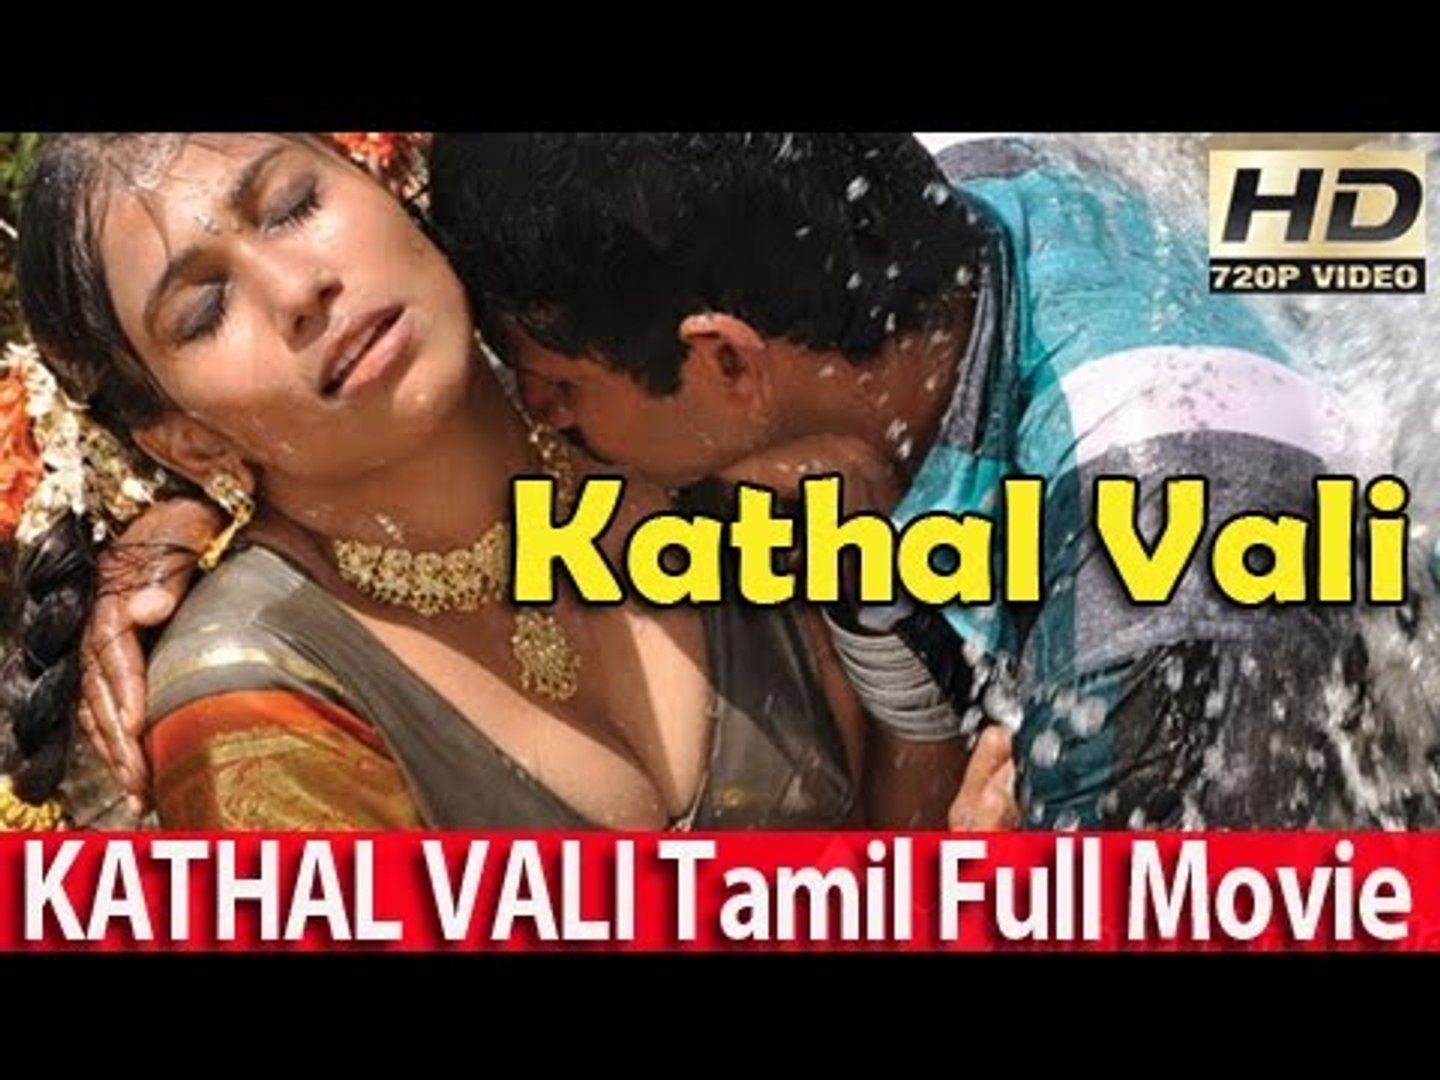 ⁣Tamil Movies 2013 Full Movie - Kathal Vali - New Tamil Movies [HD]